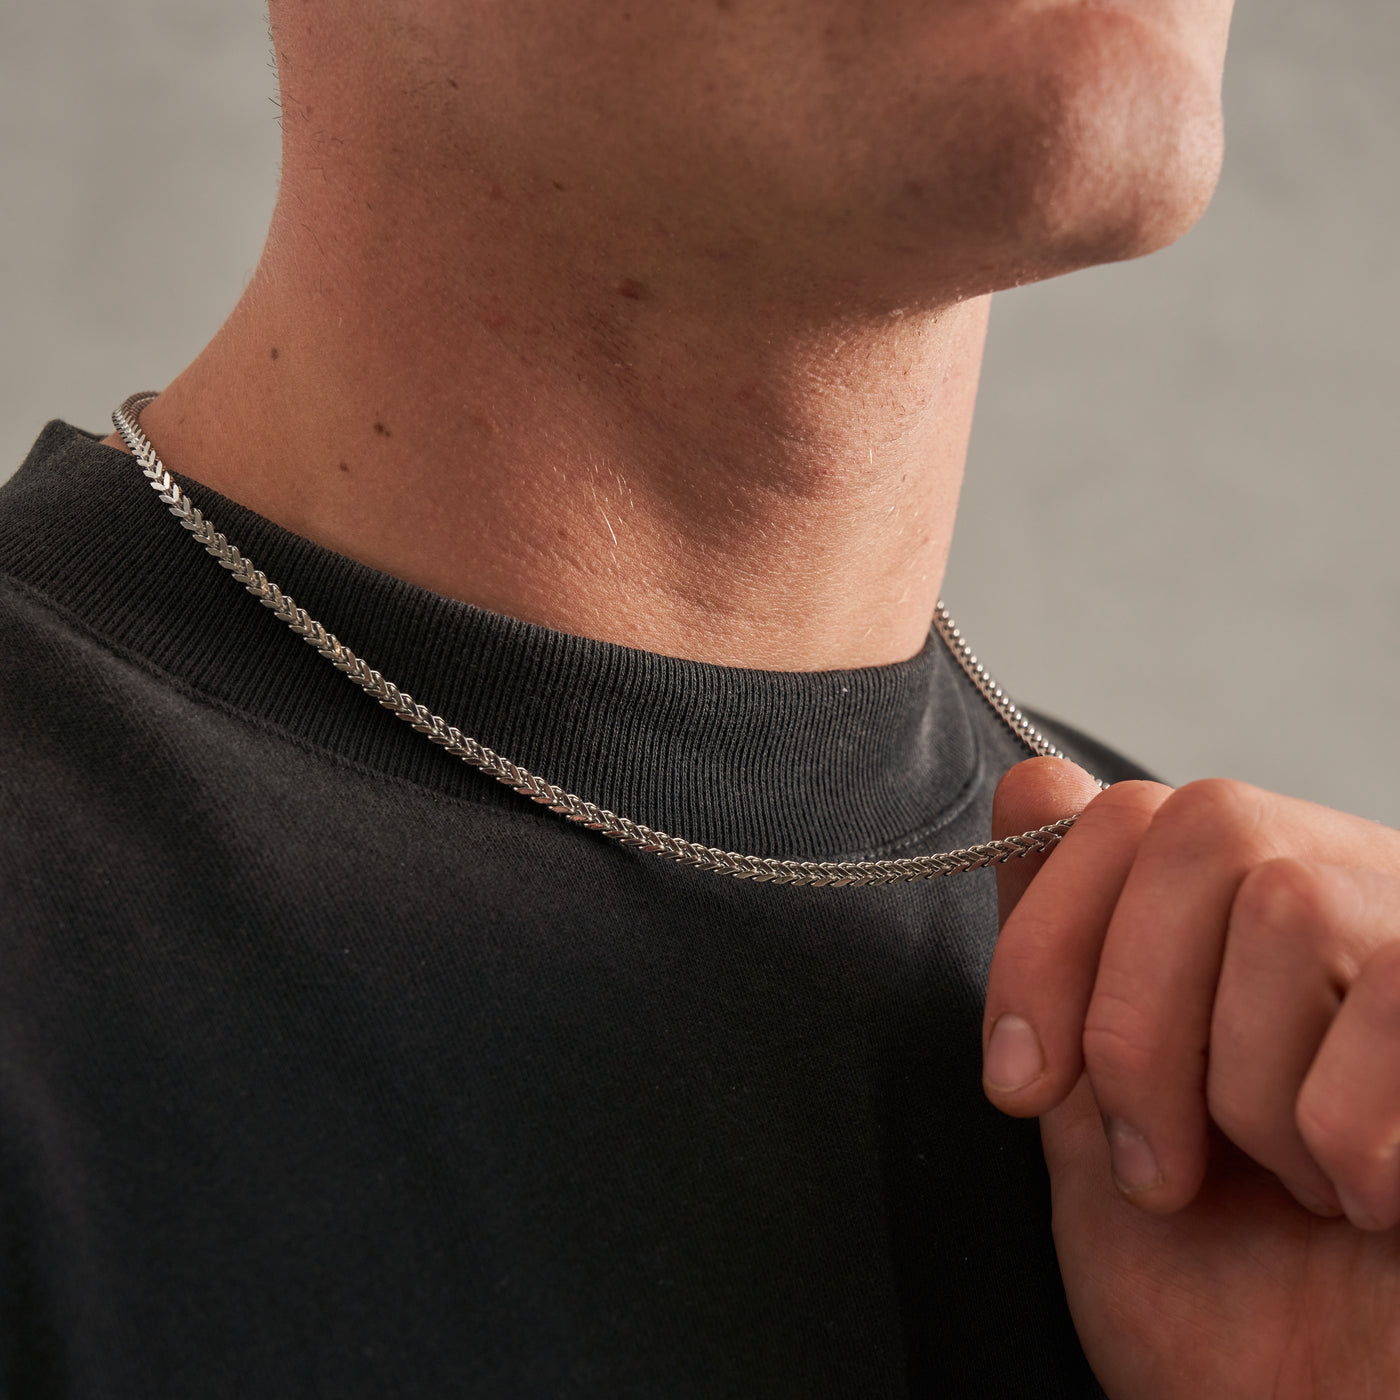 2mm silver Square Franco neck chain for men online in Pakistan